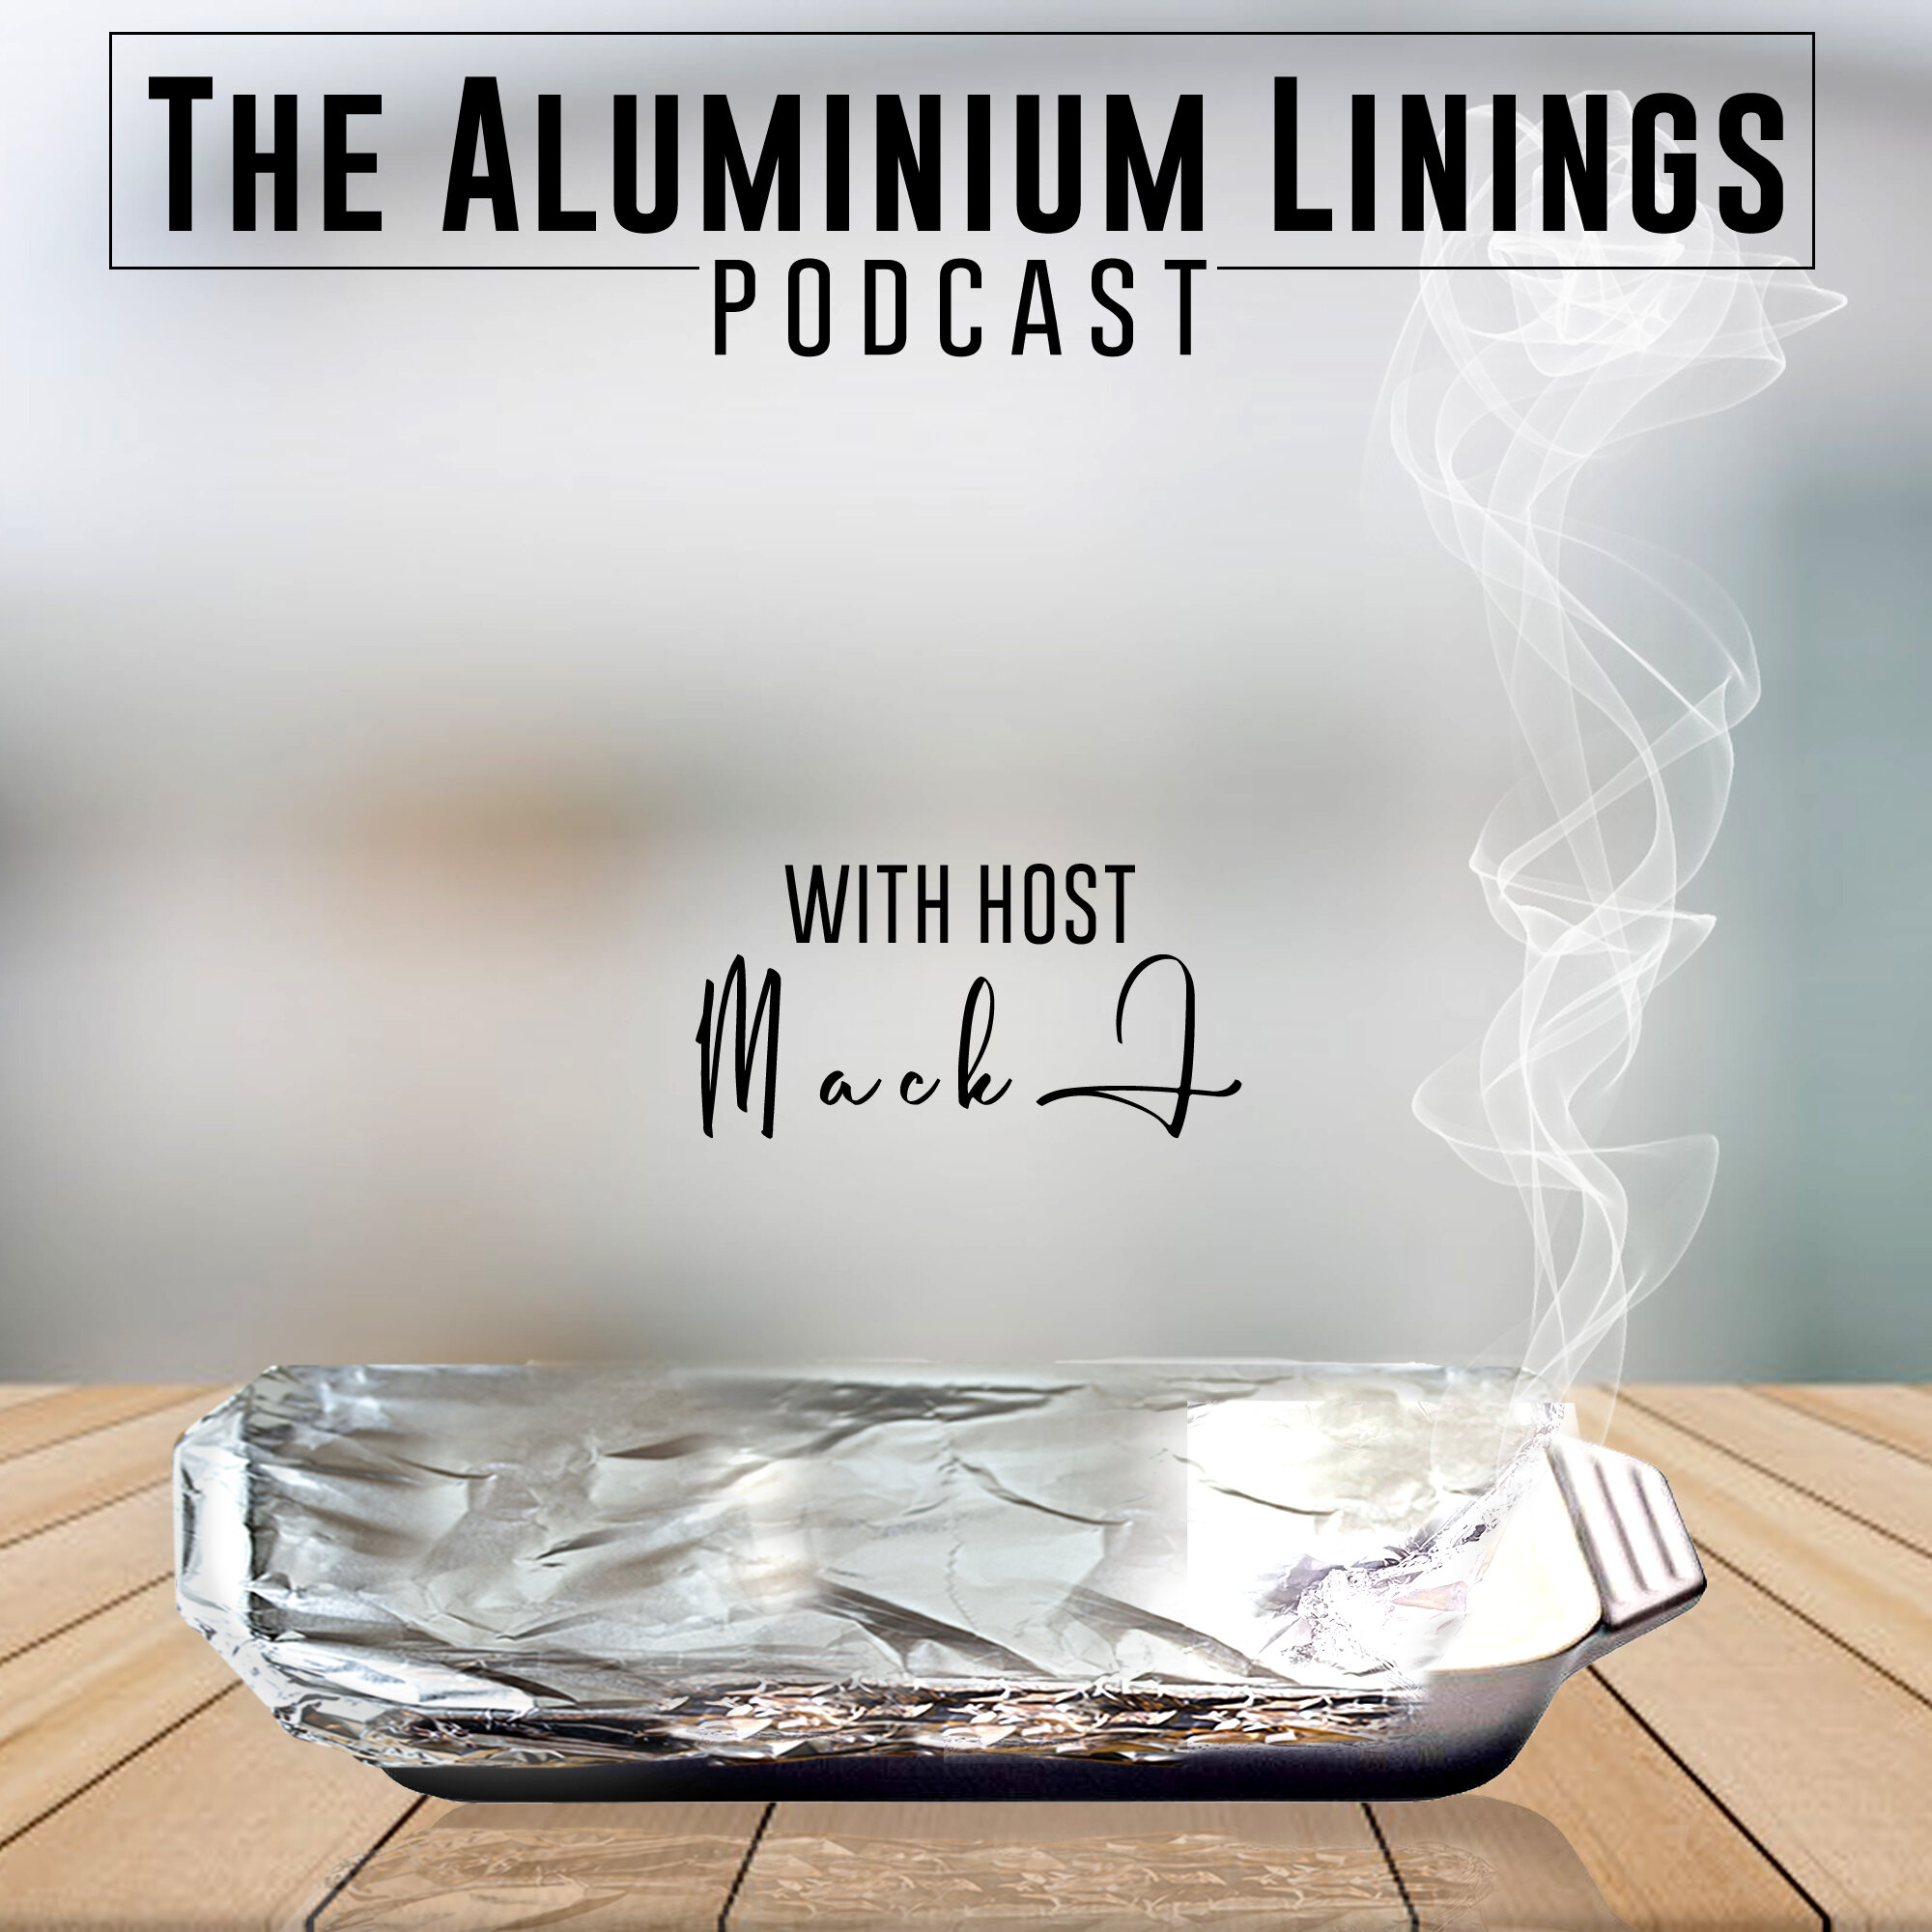 The Aluminium Linings Podcast